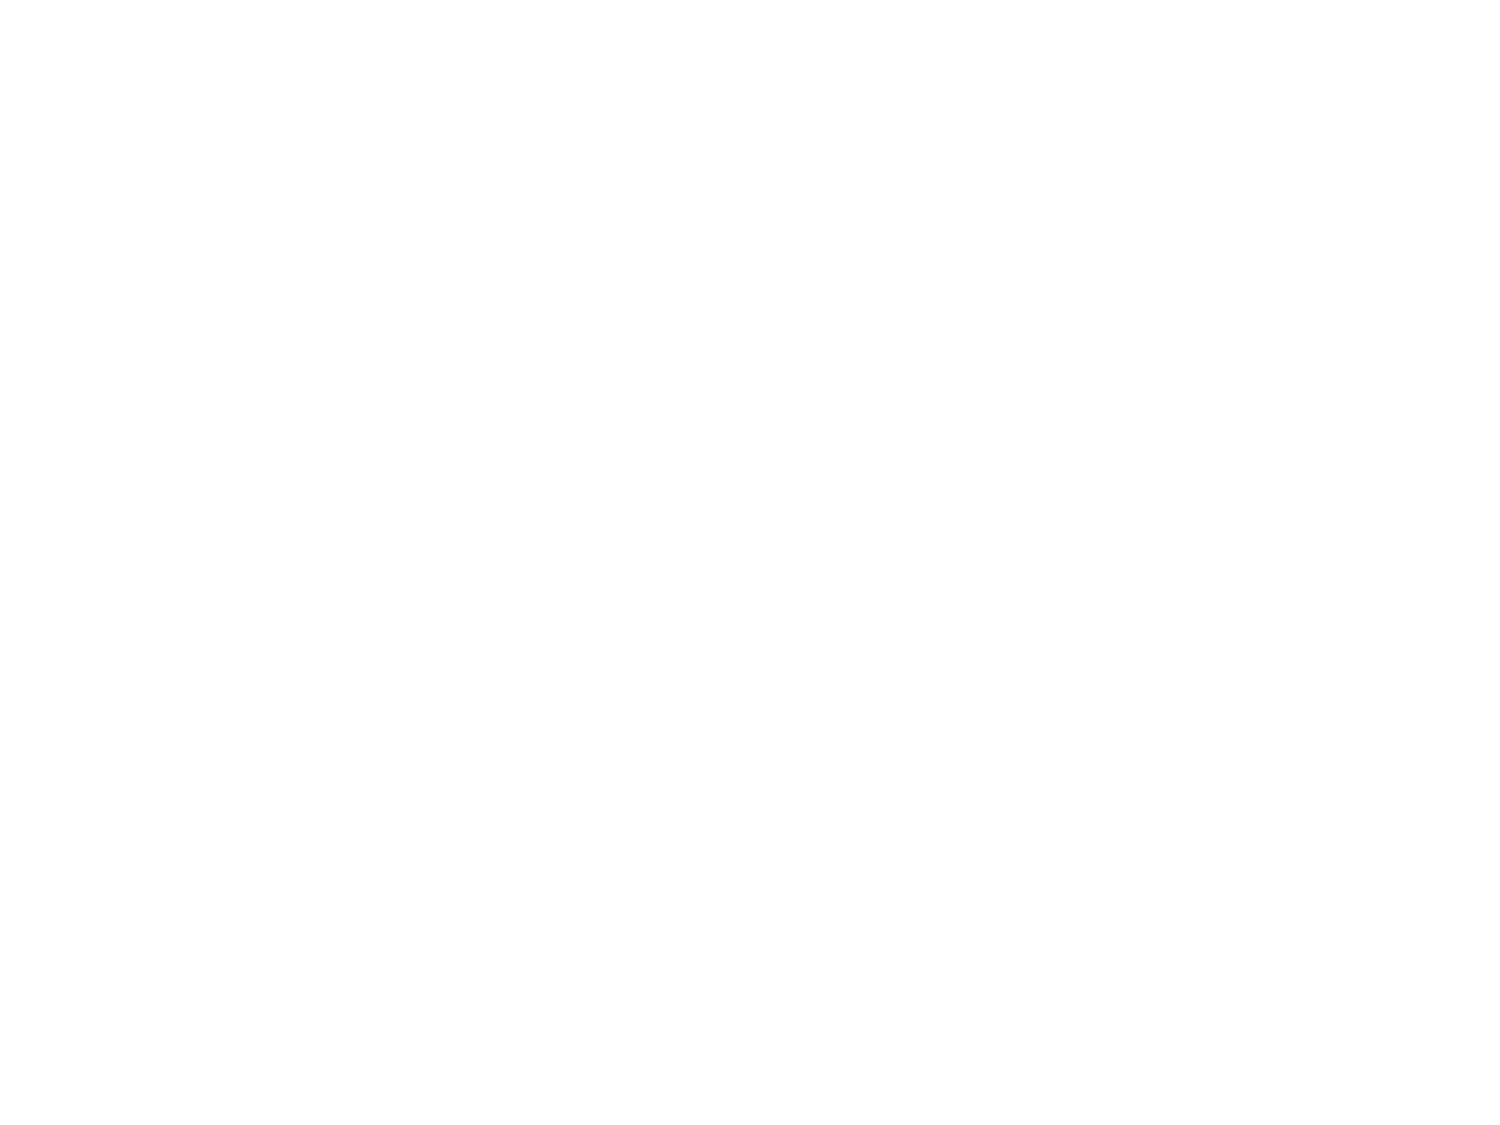 Harlowe